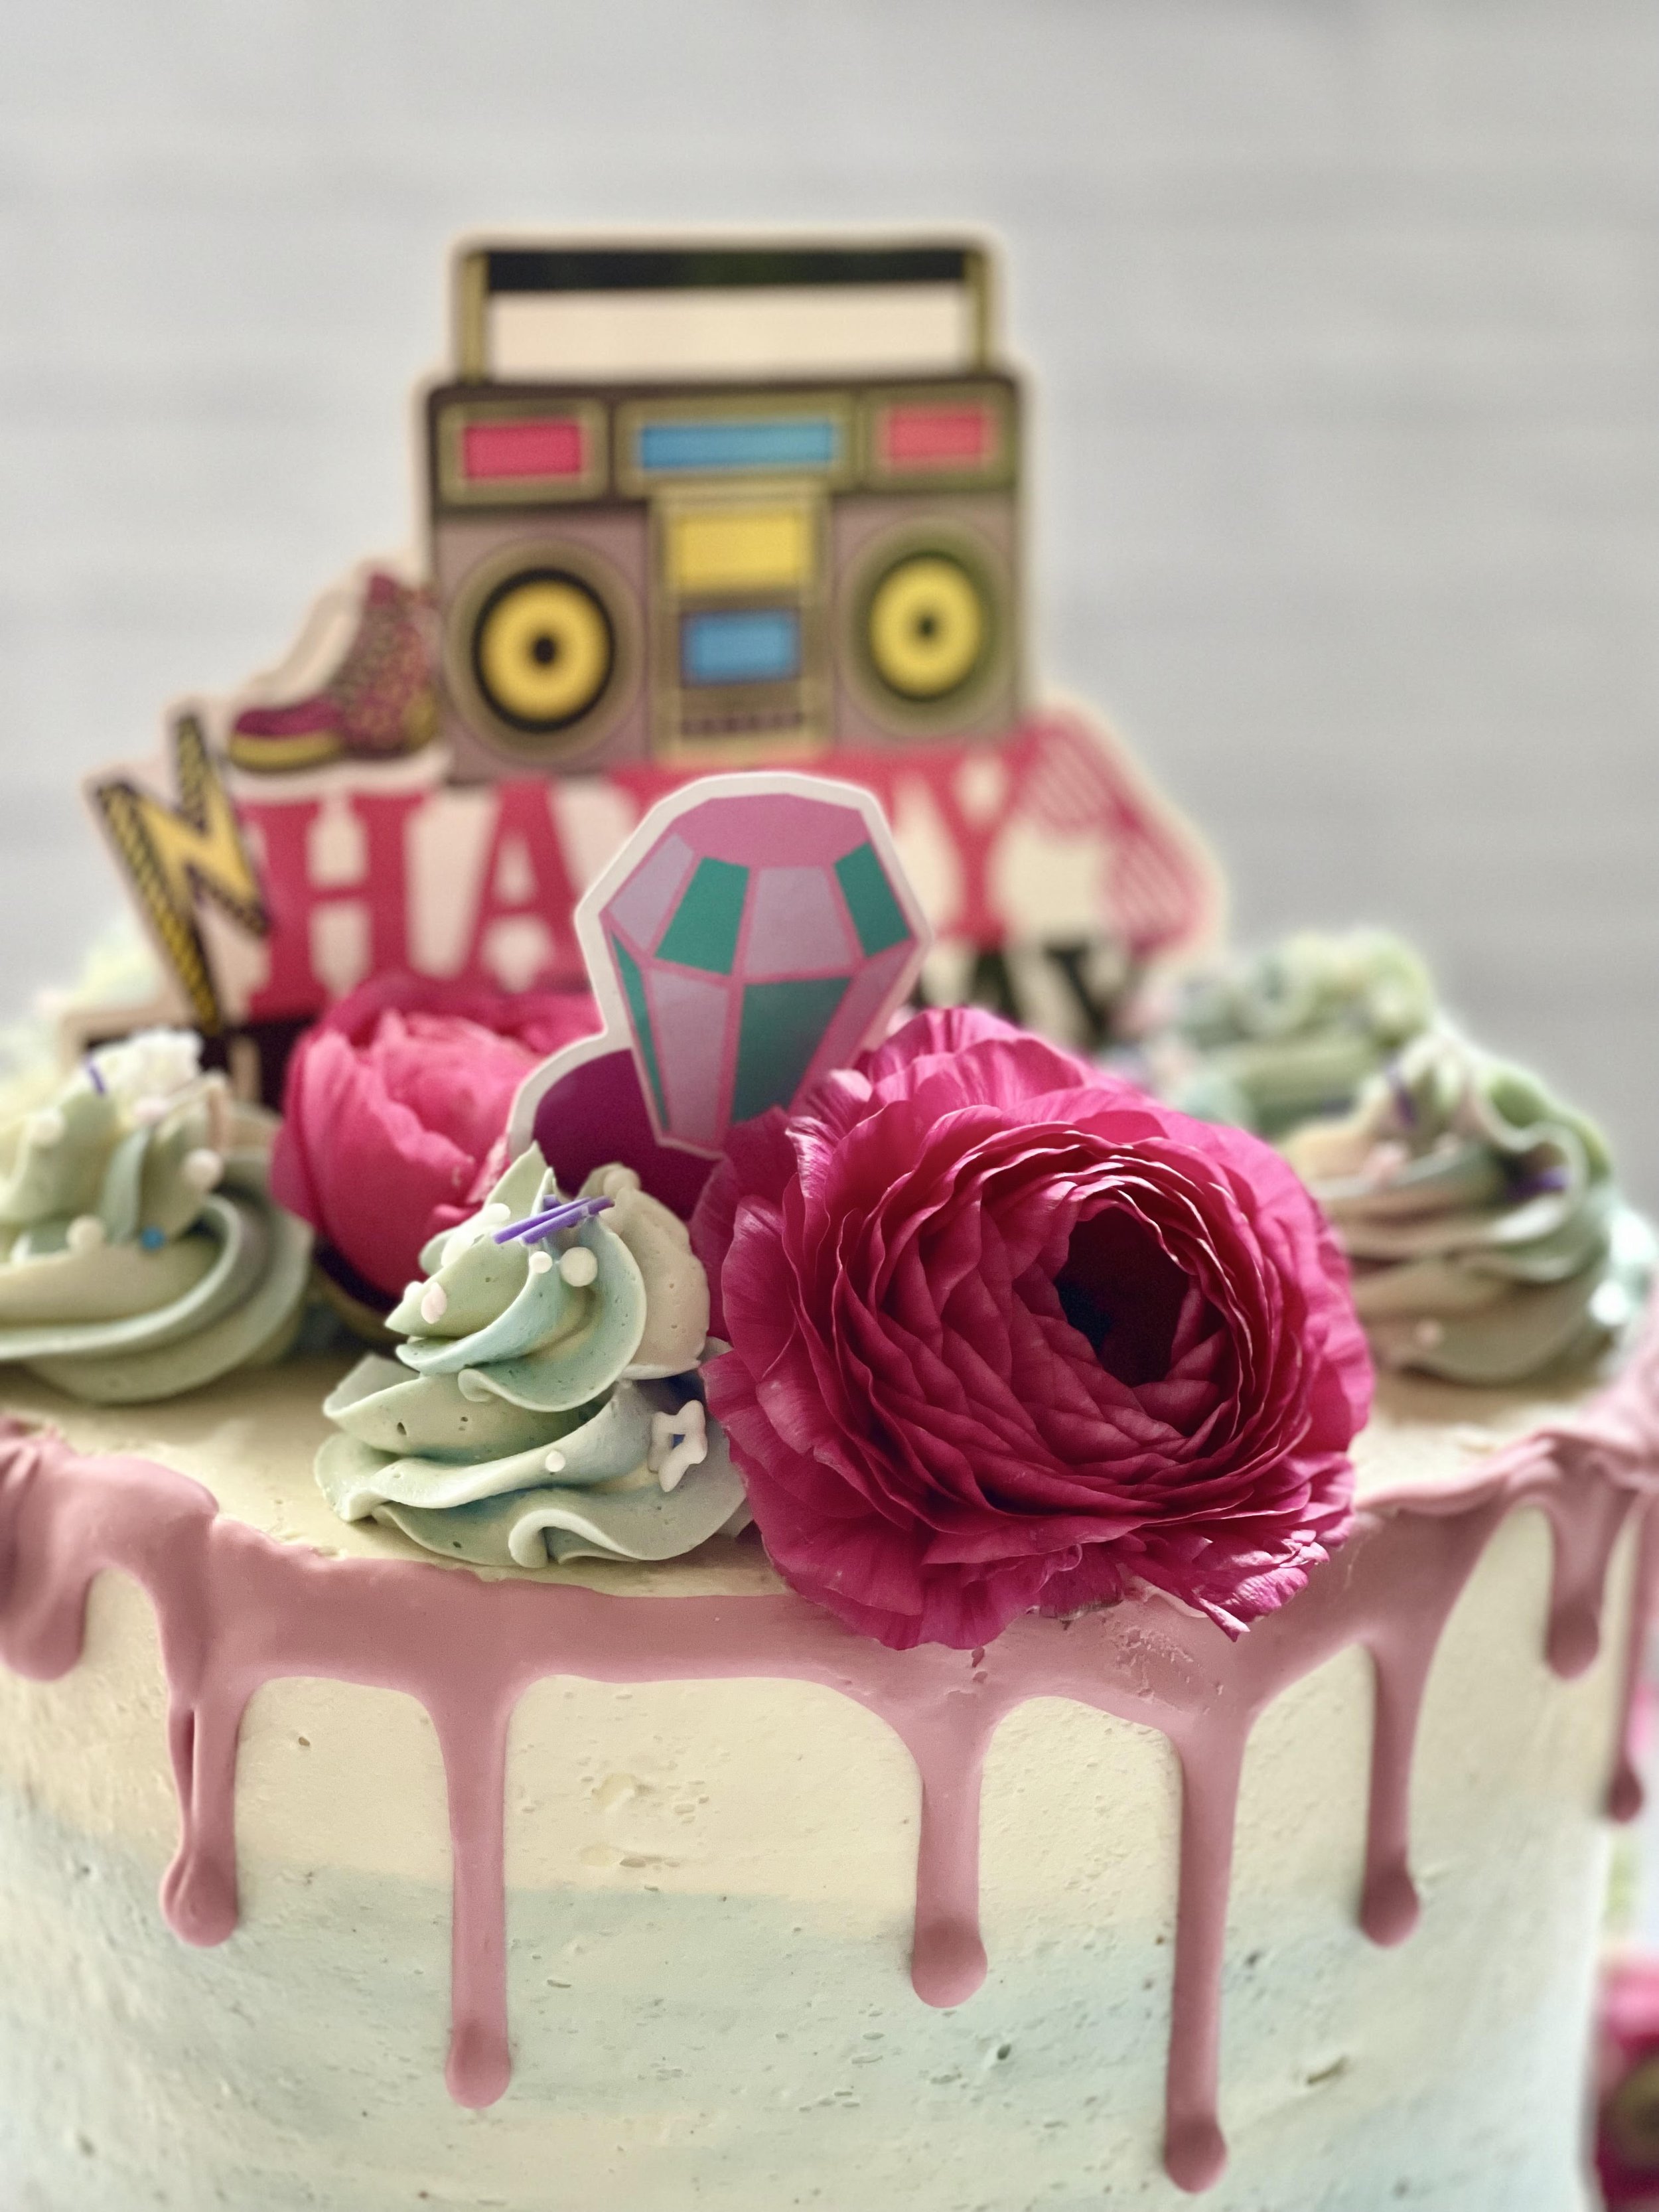 Top 10 Best Birthday Cake Delivery near Tarzana, Los Angeles, CA - August  2023 - Yelp